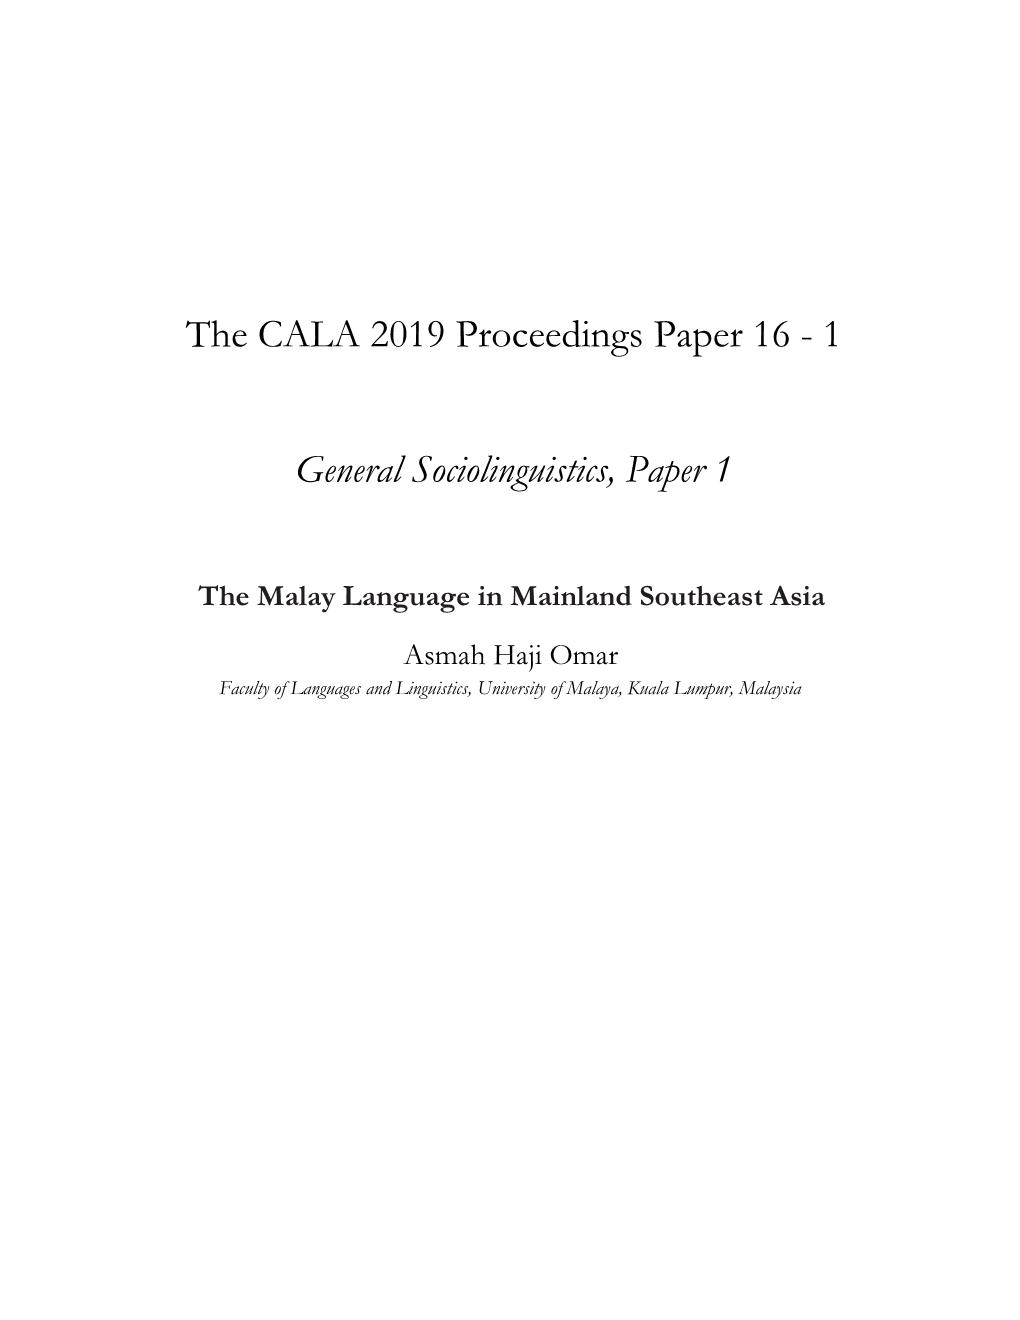 The CALA 2019 Proceedings Paper 16 - 1